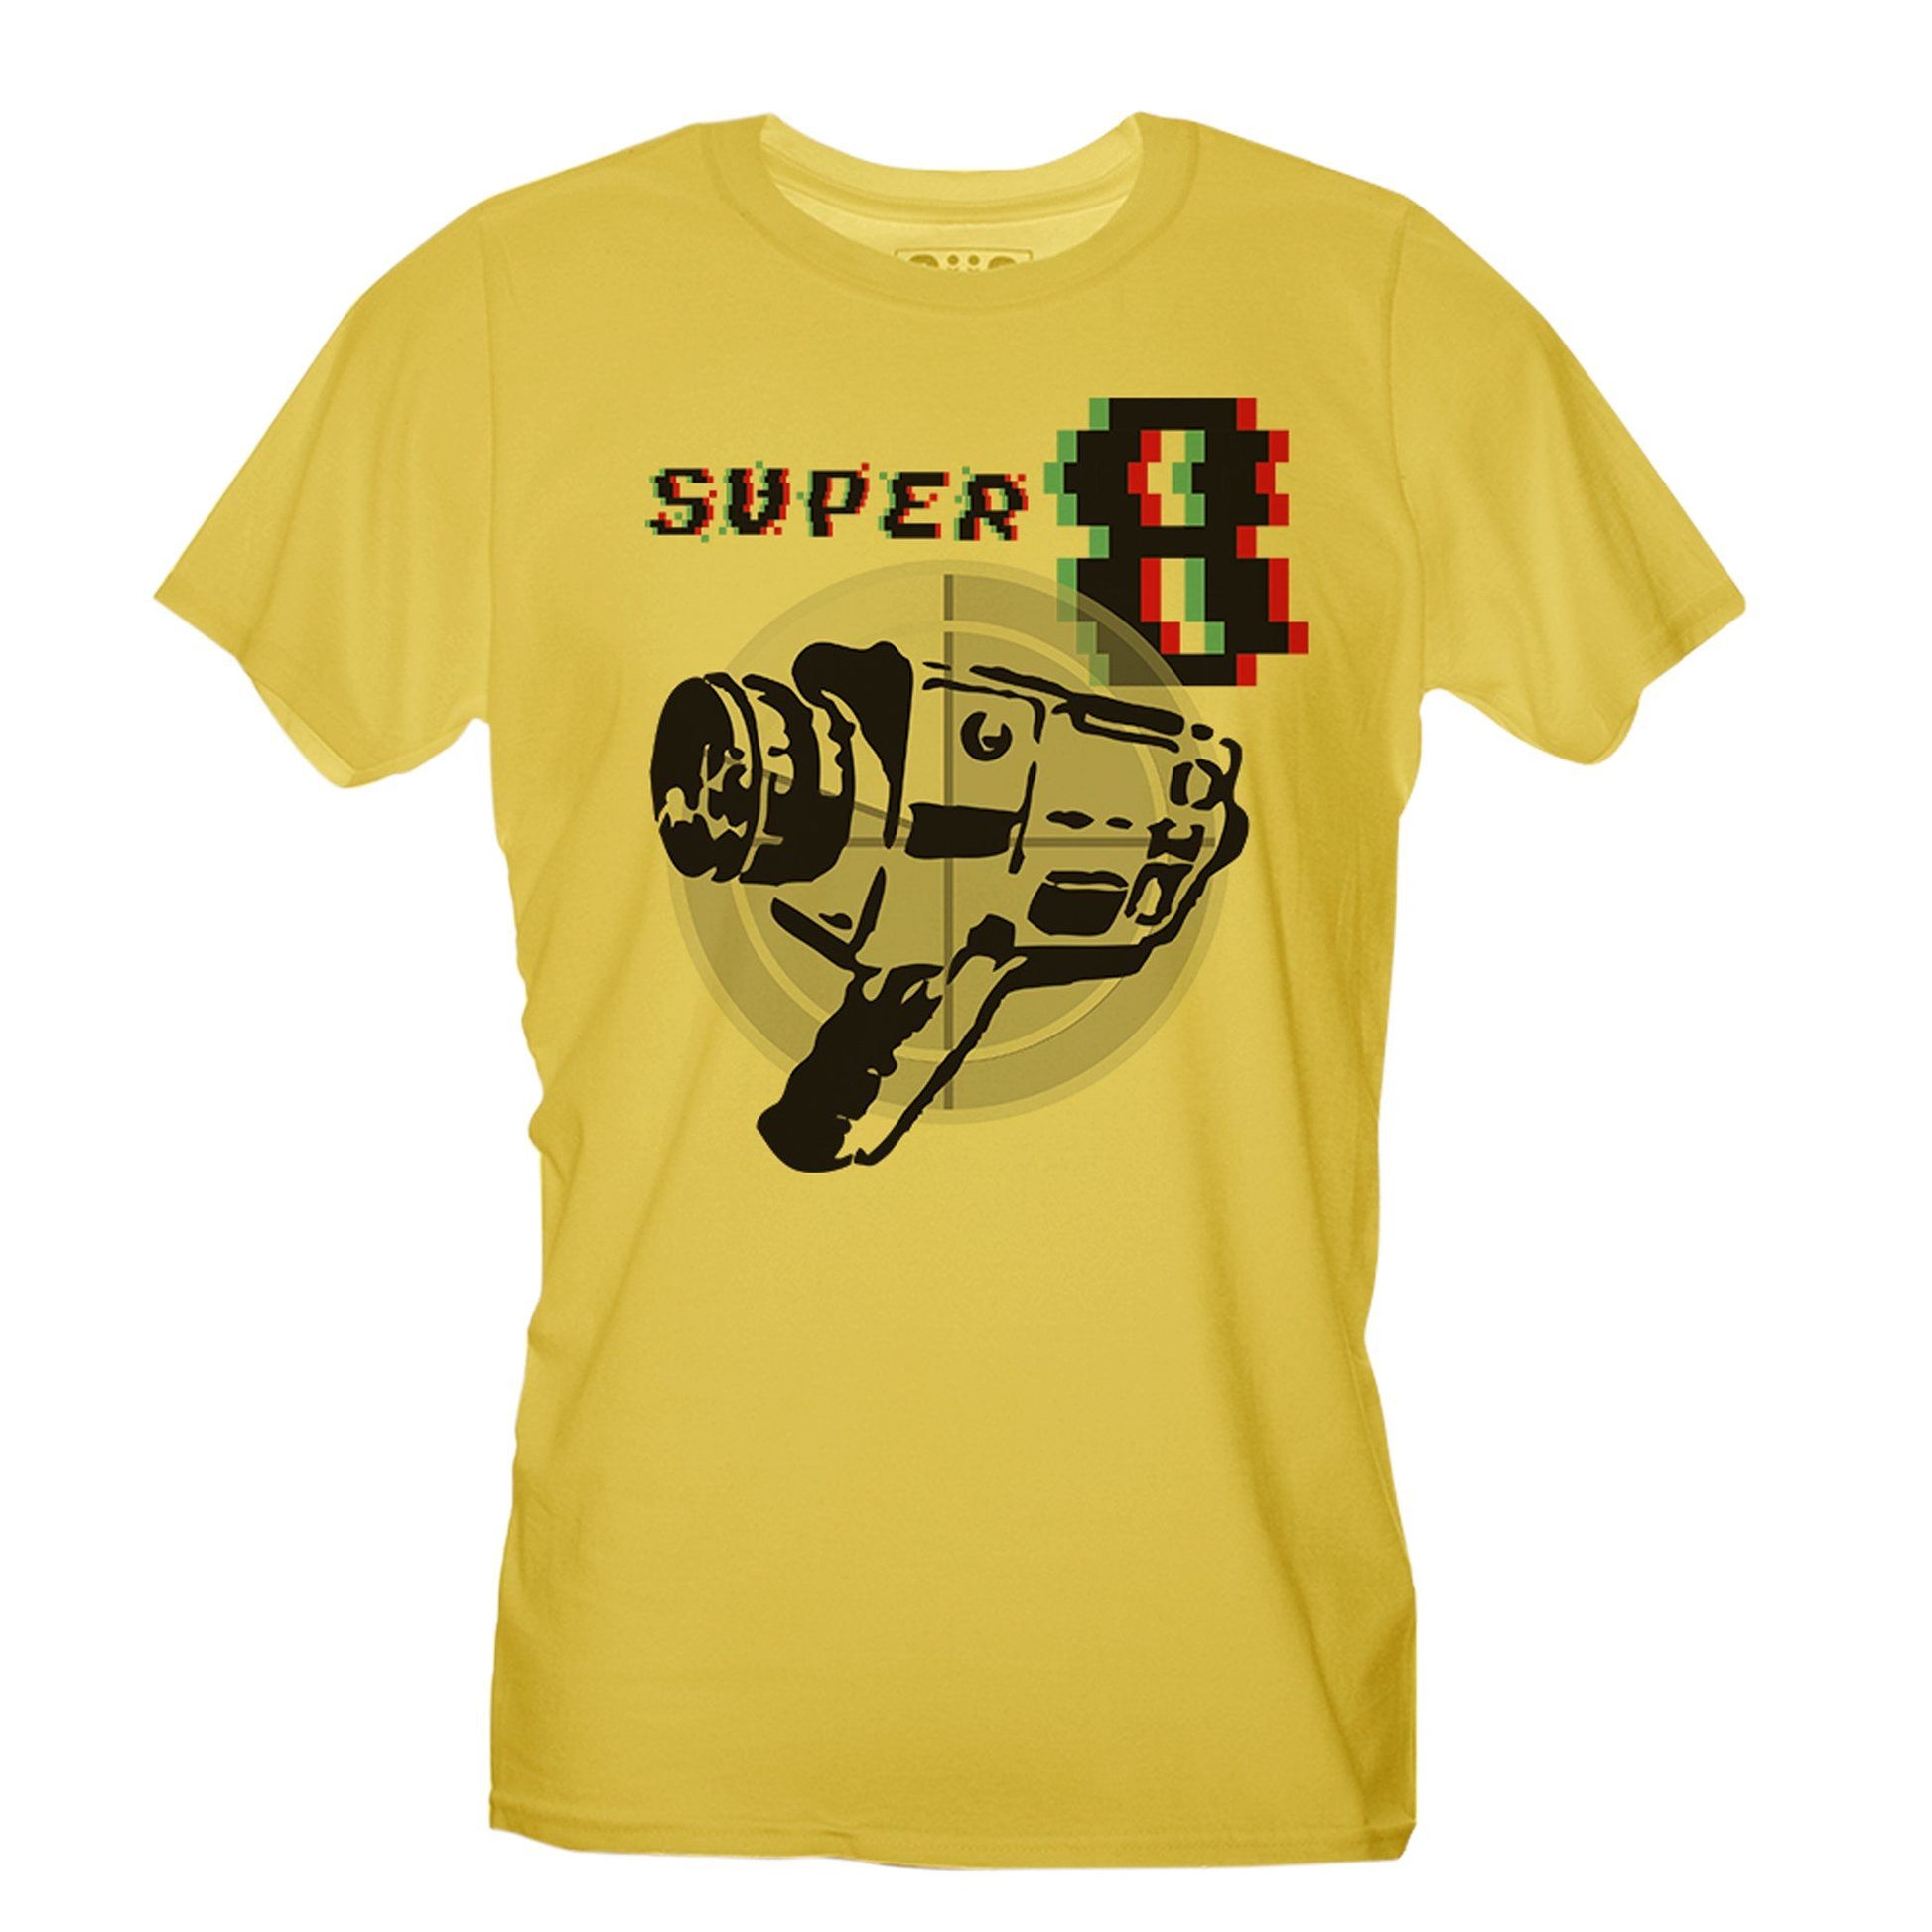 Dark Khaki T-Shirt Super 8 Videocamera old school anni 70 - Choose ur Color Cuc Shop